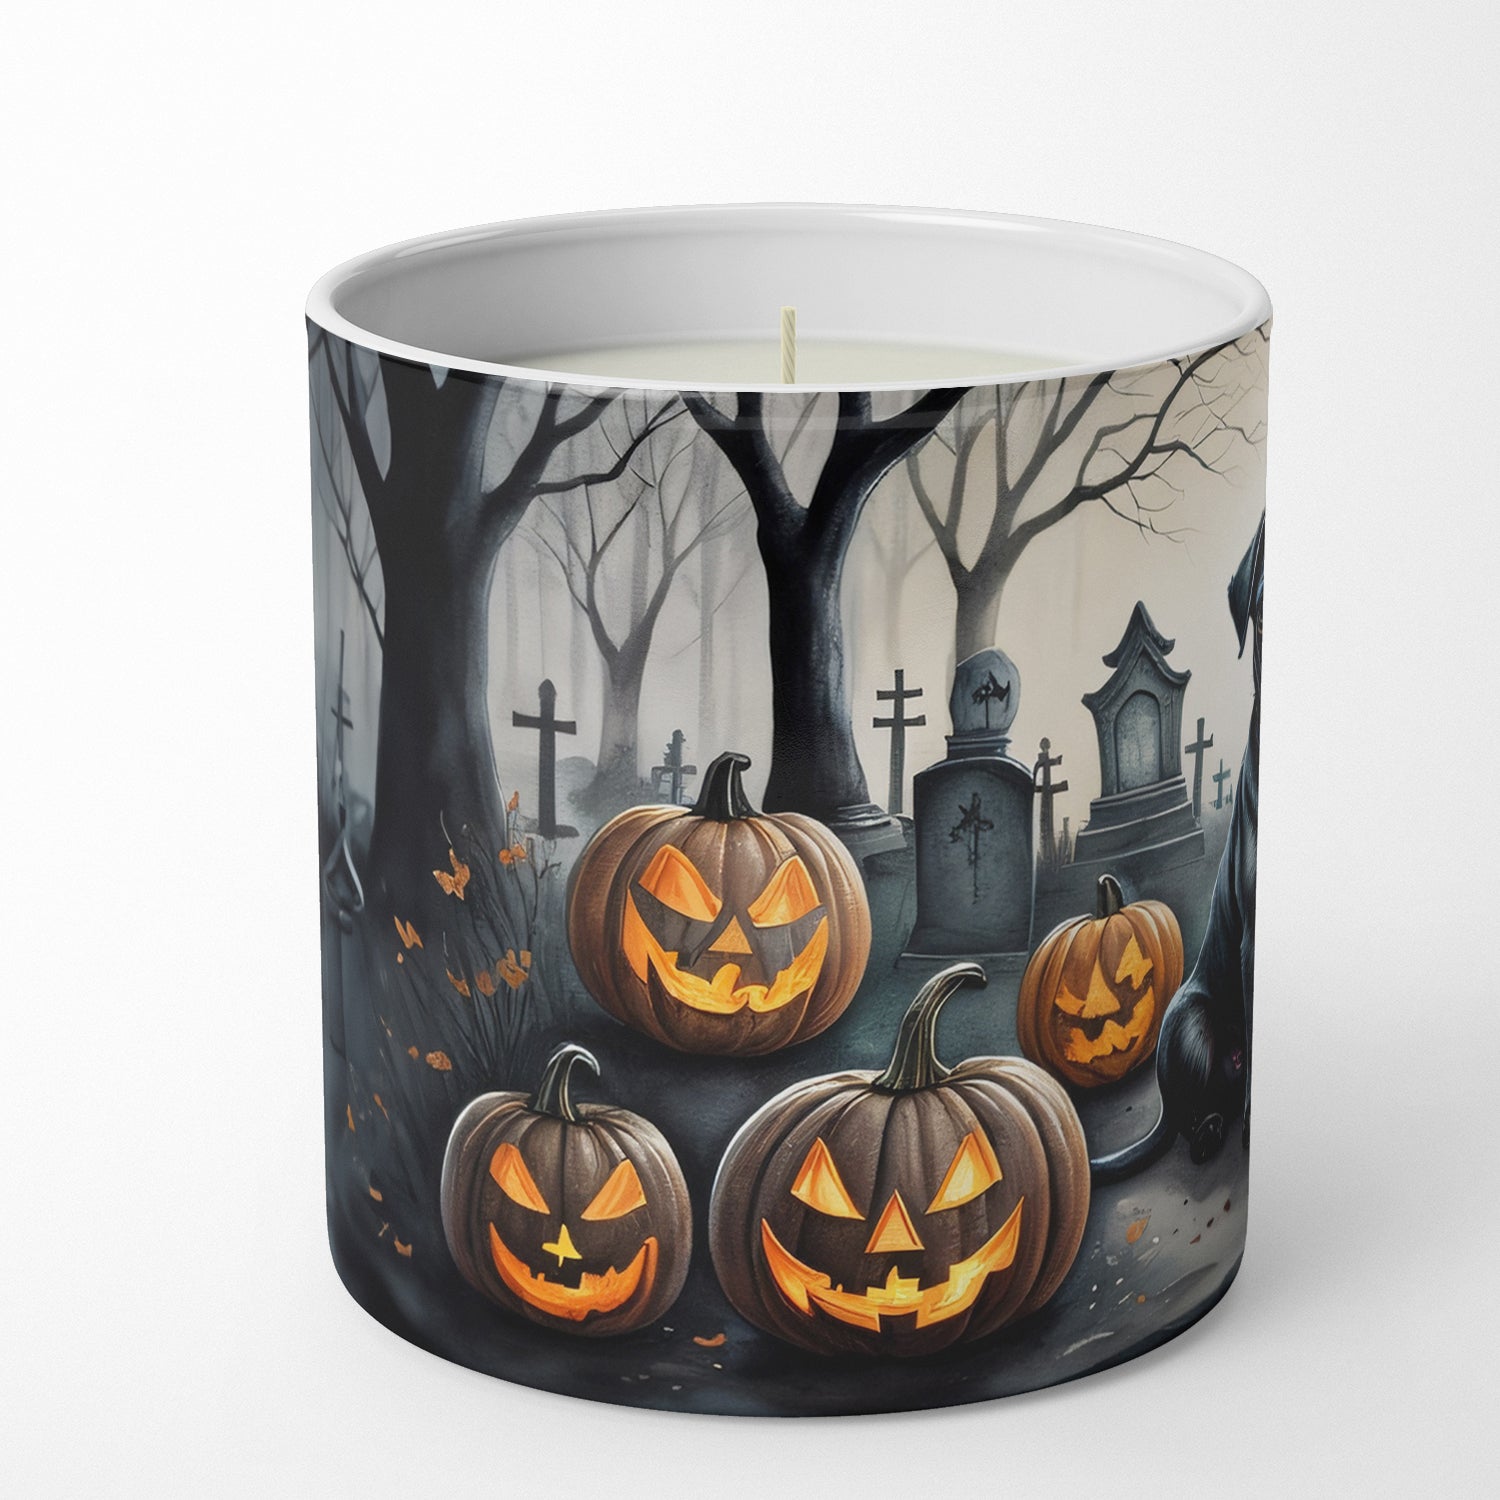 Black Pug Spooky Halloween Decorative Soy Candle